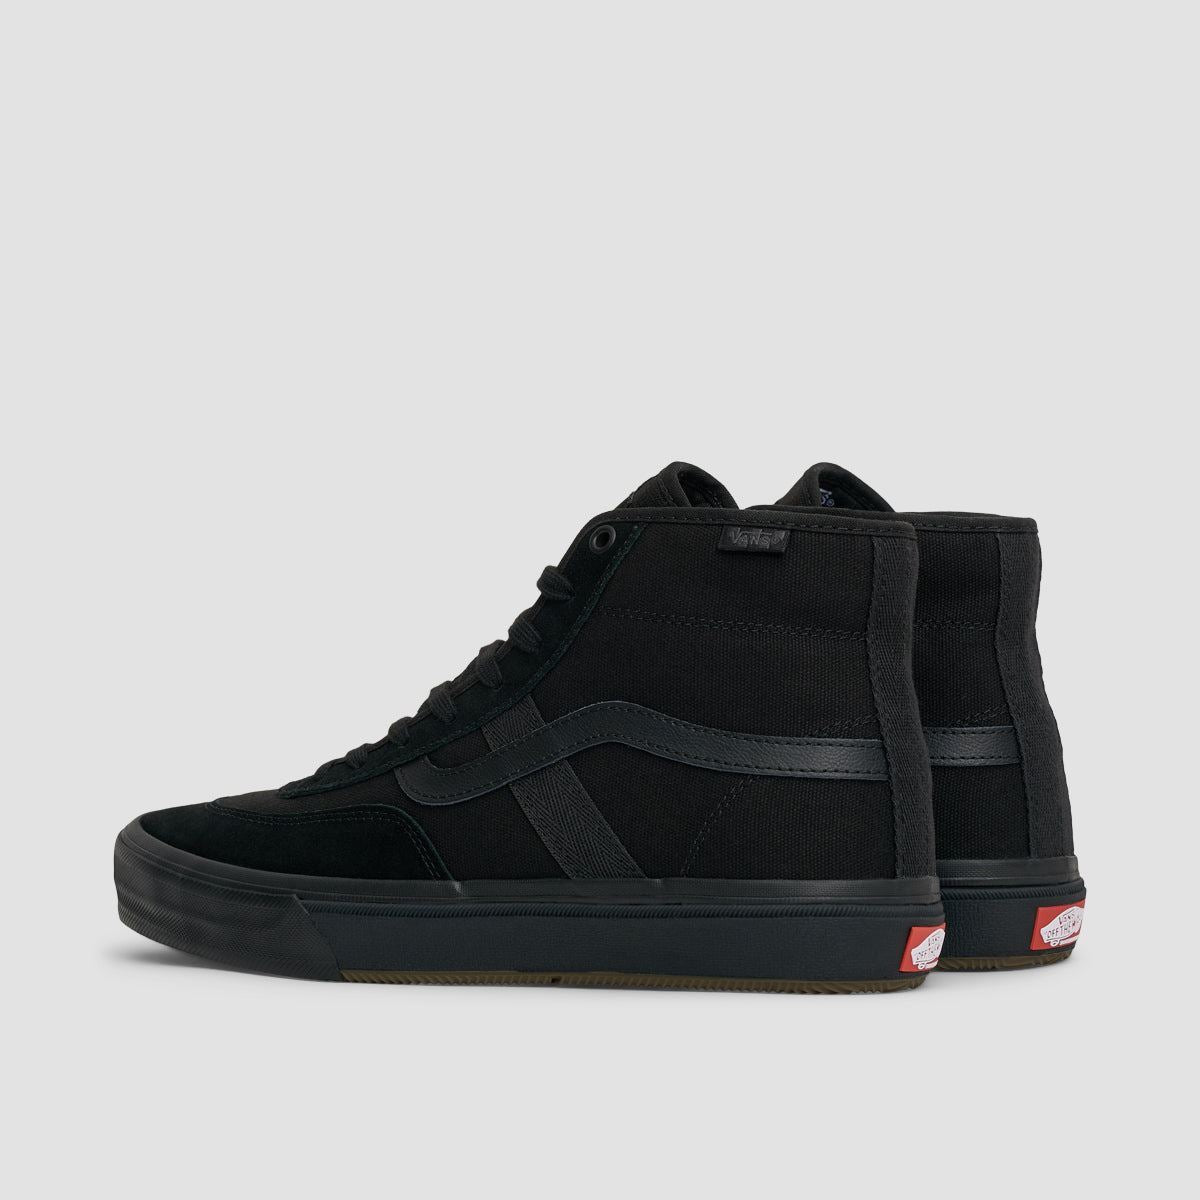 Vans Crockett High Shoes - Black